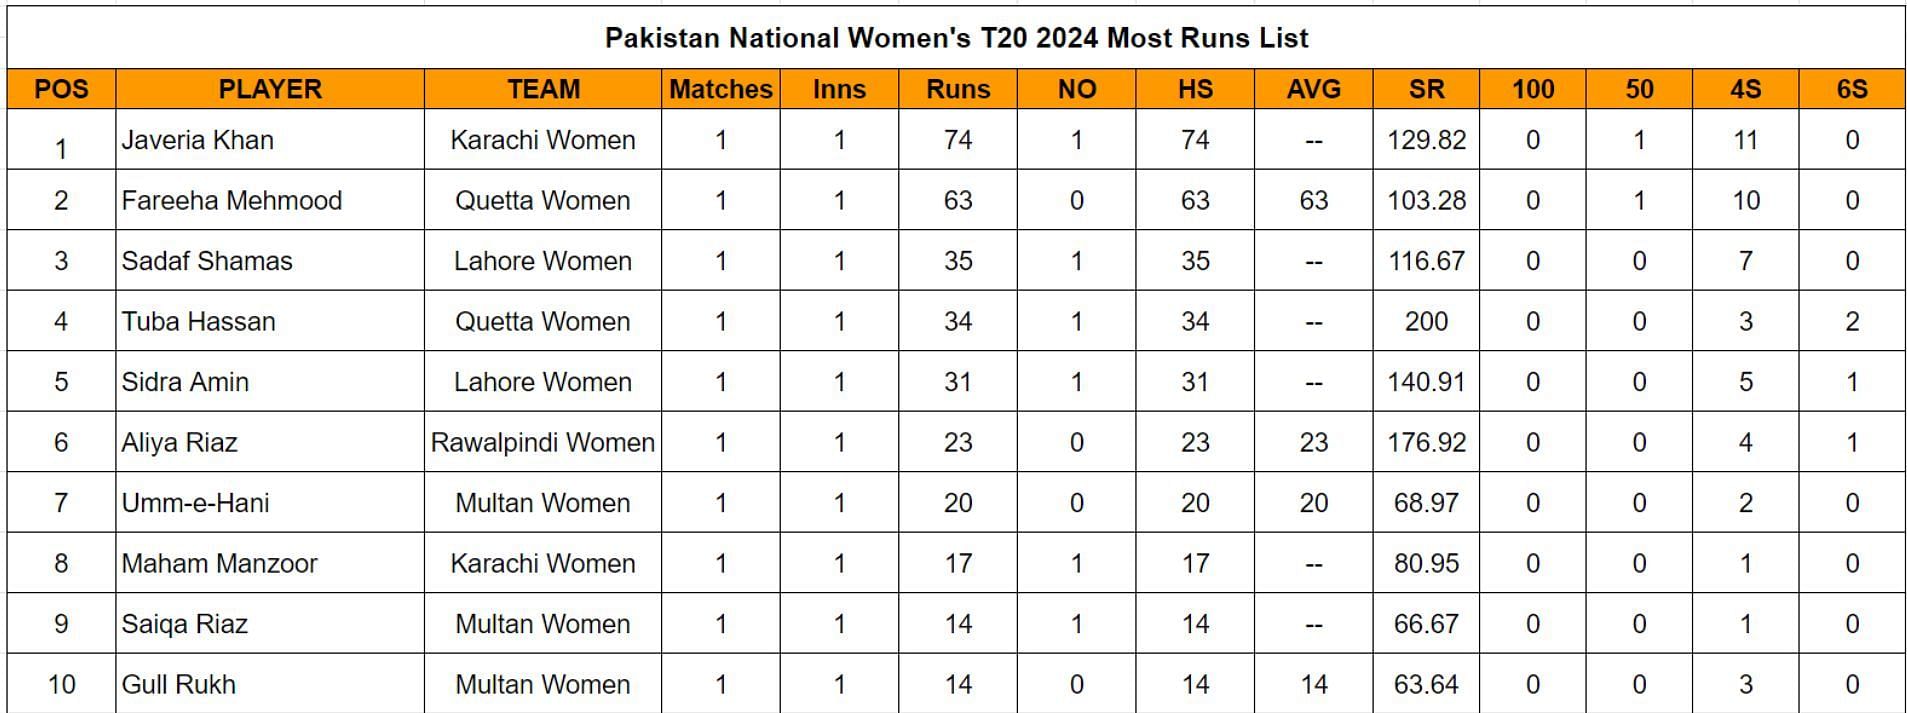 Pakistan National Women